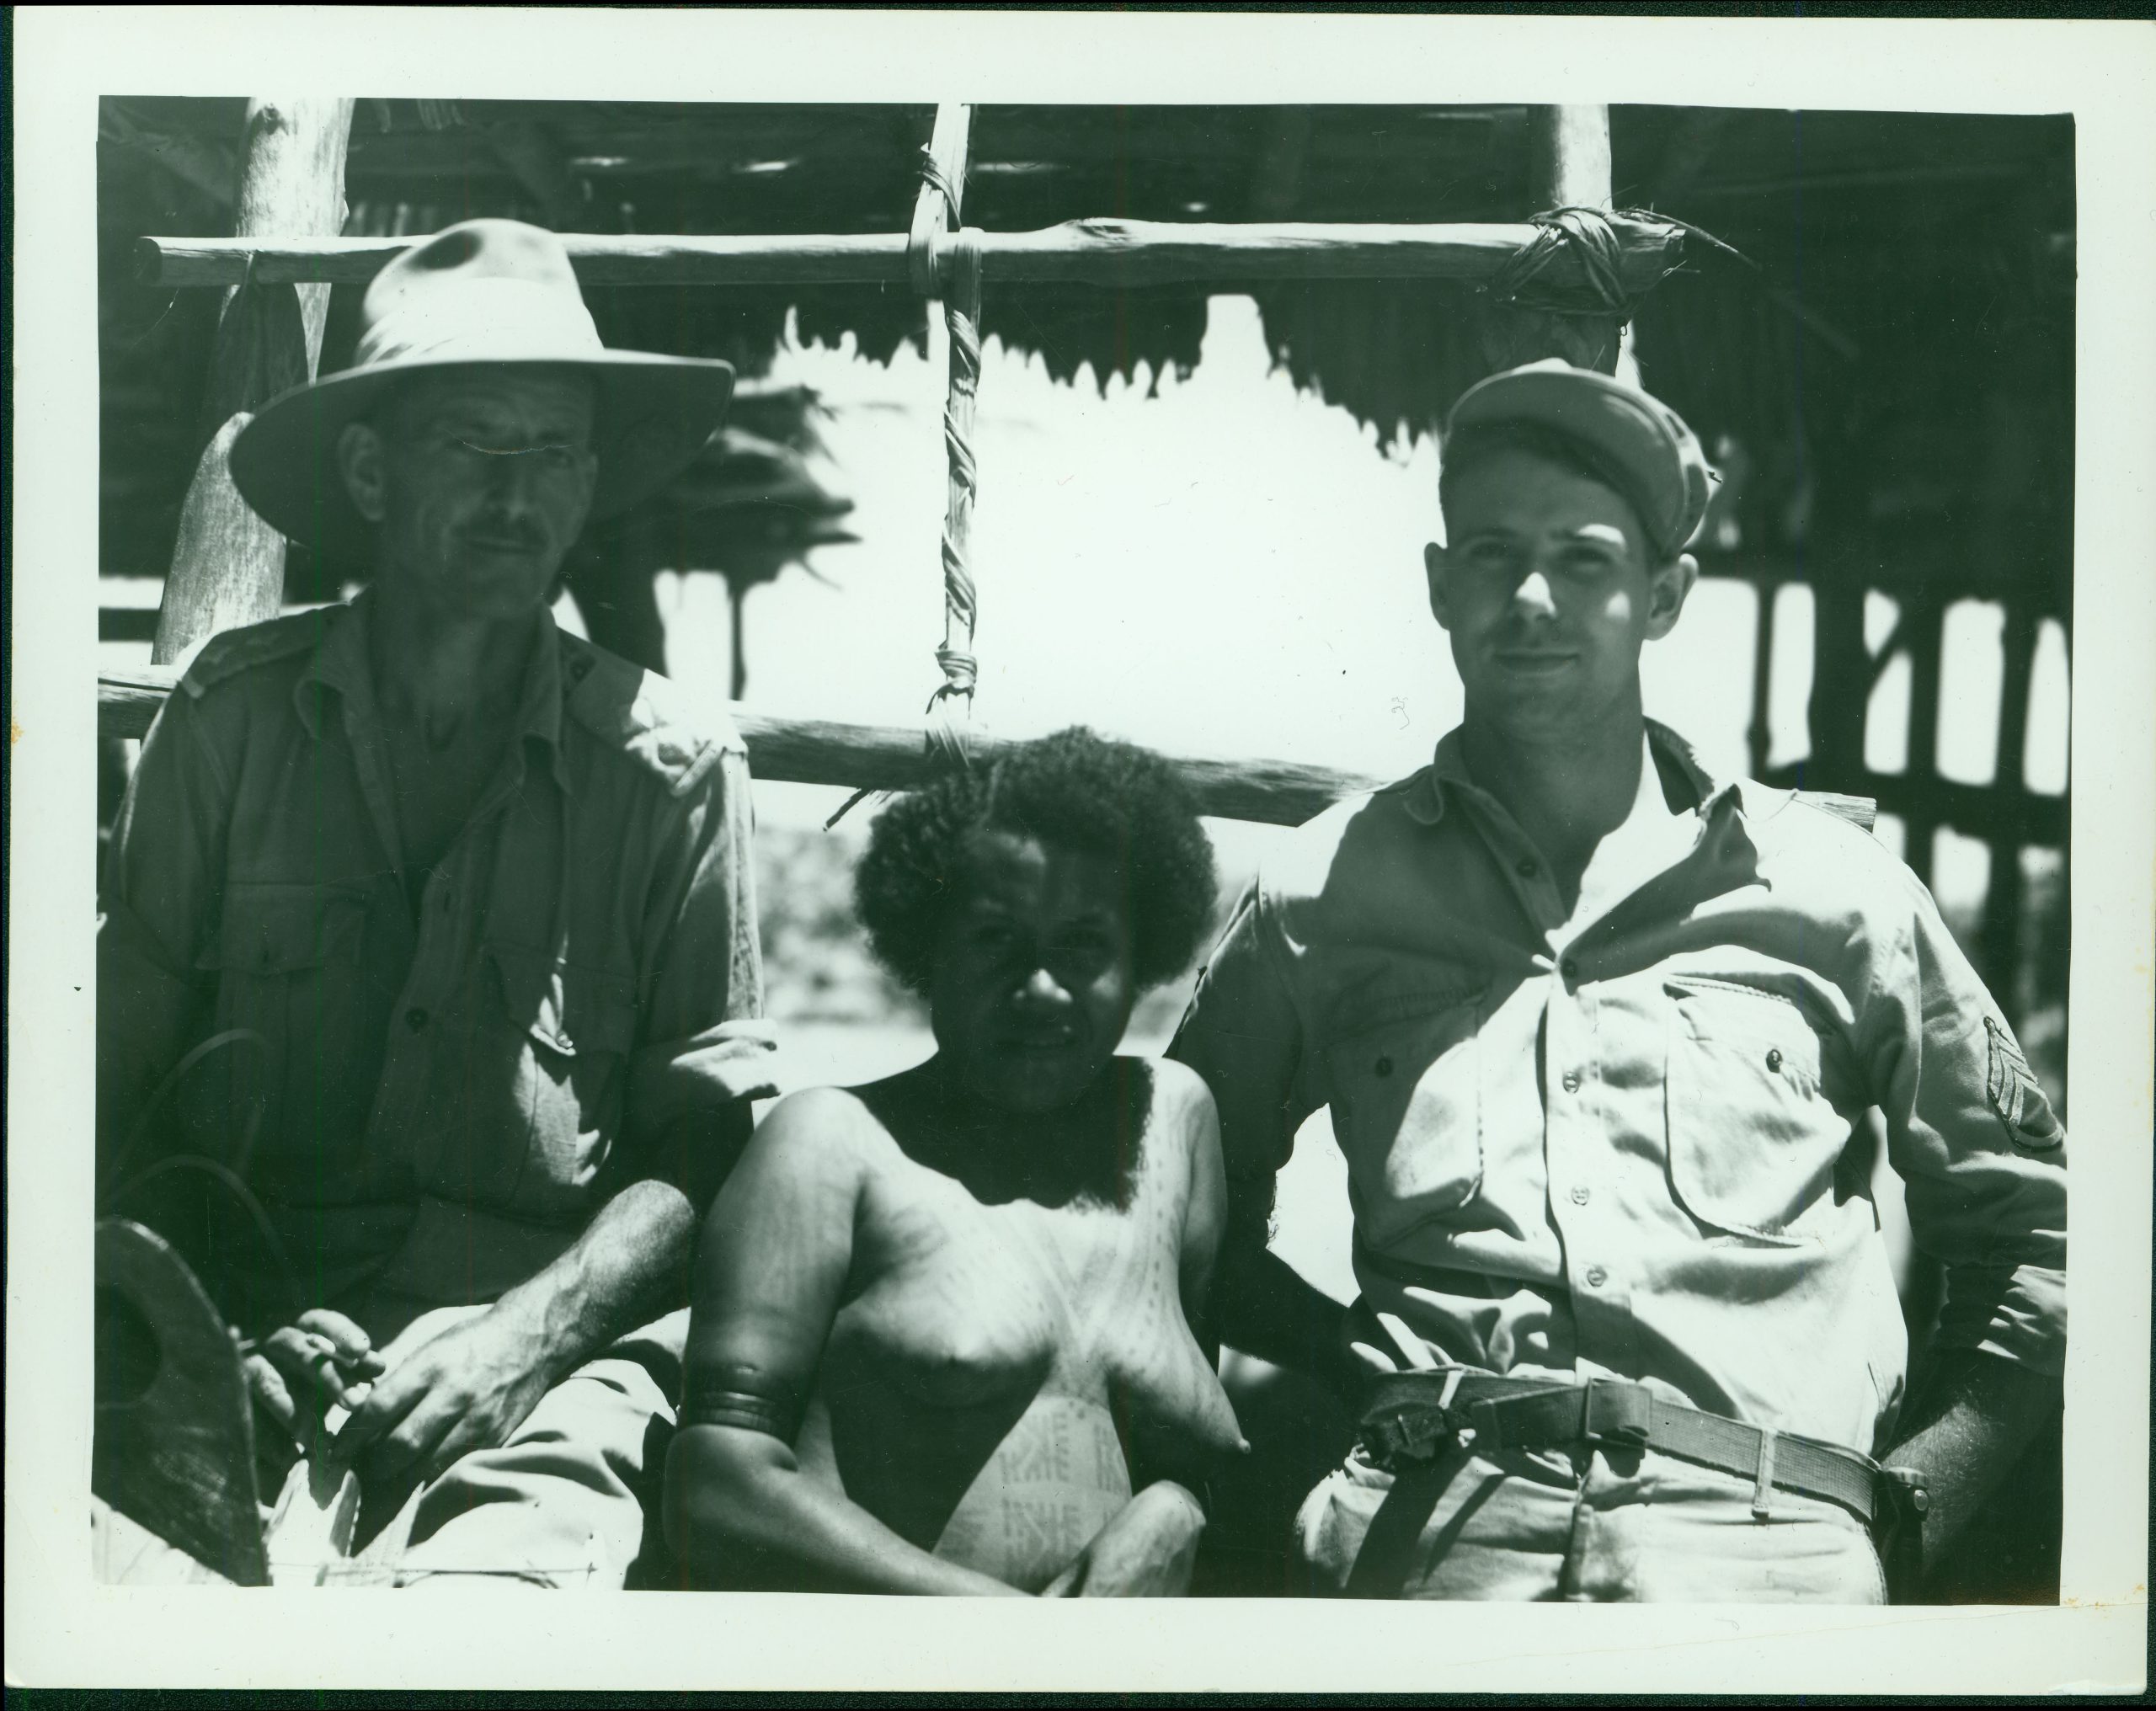 Merchant with Australian Lieutenant pose with native woman [RG5841-1-18]